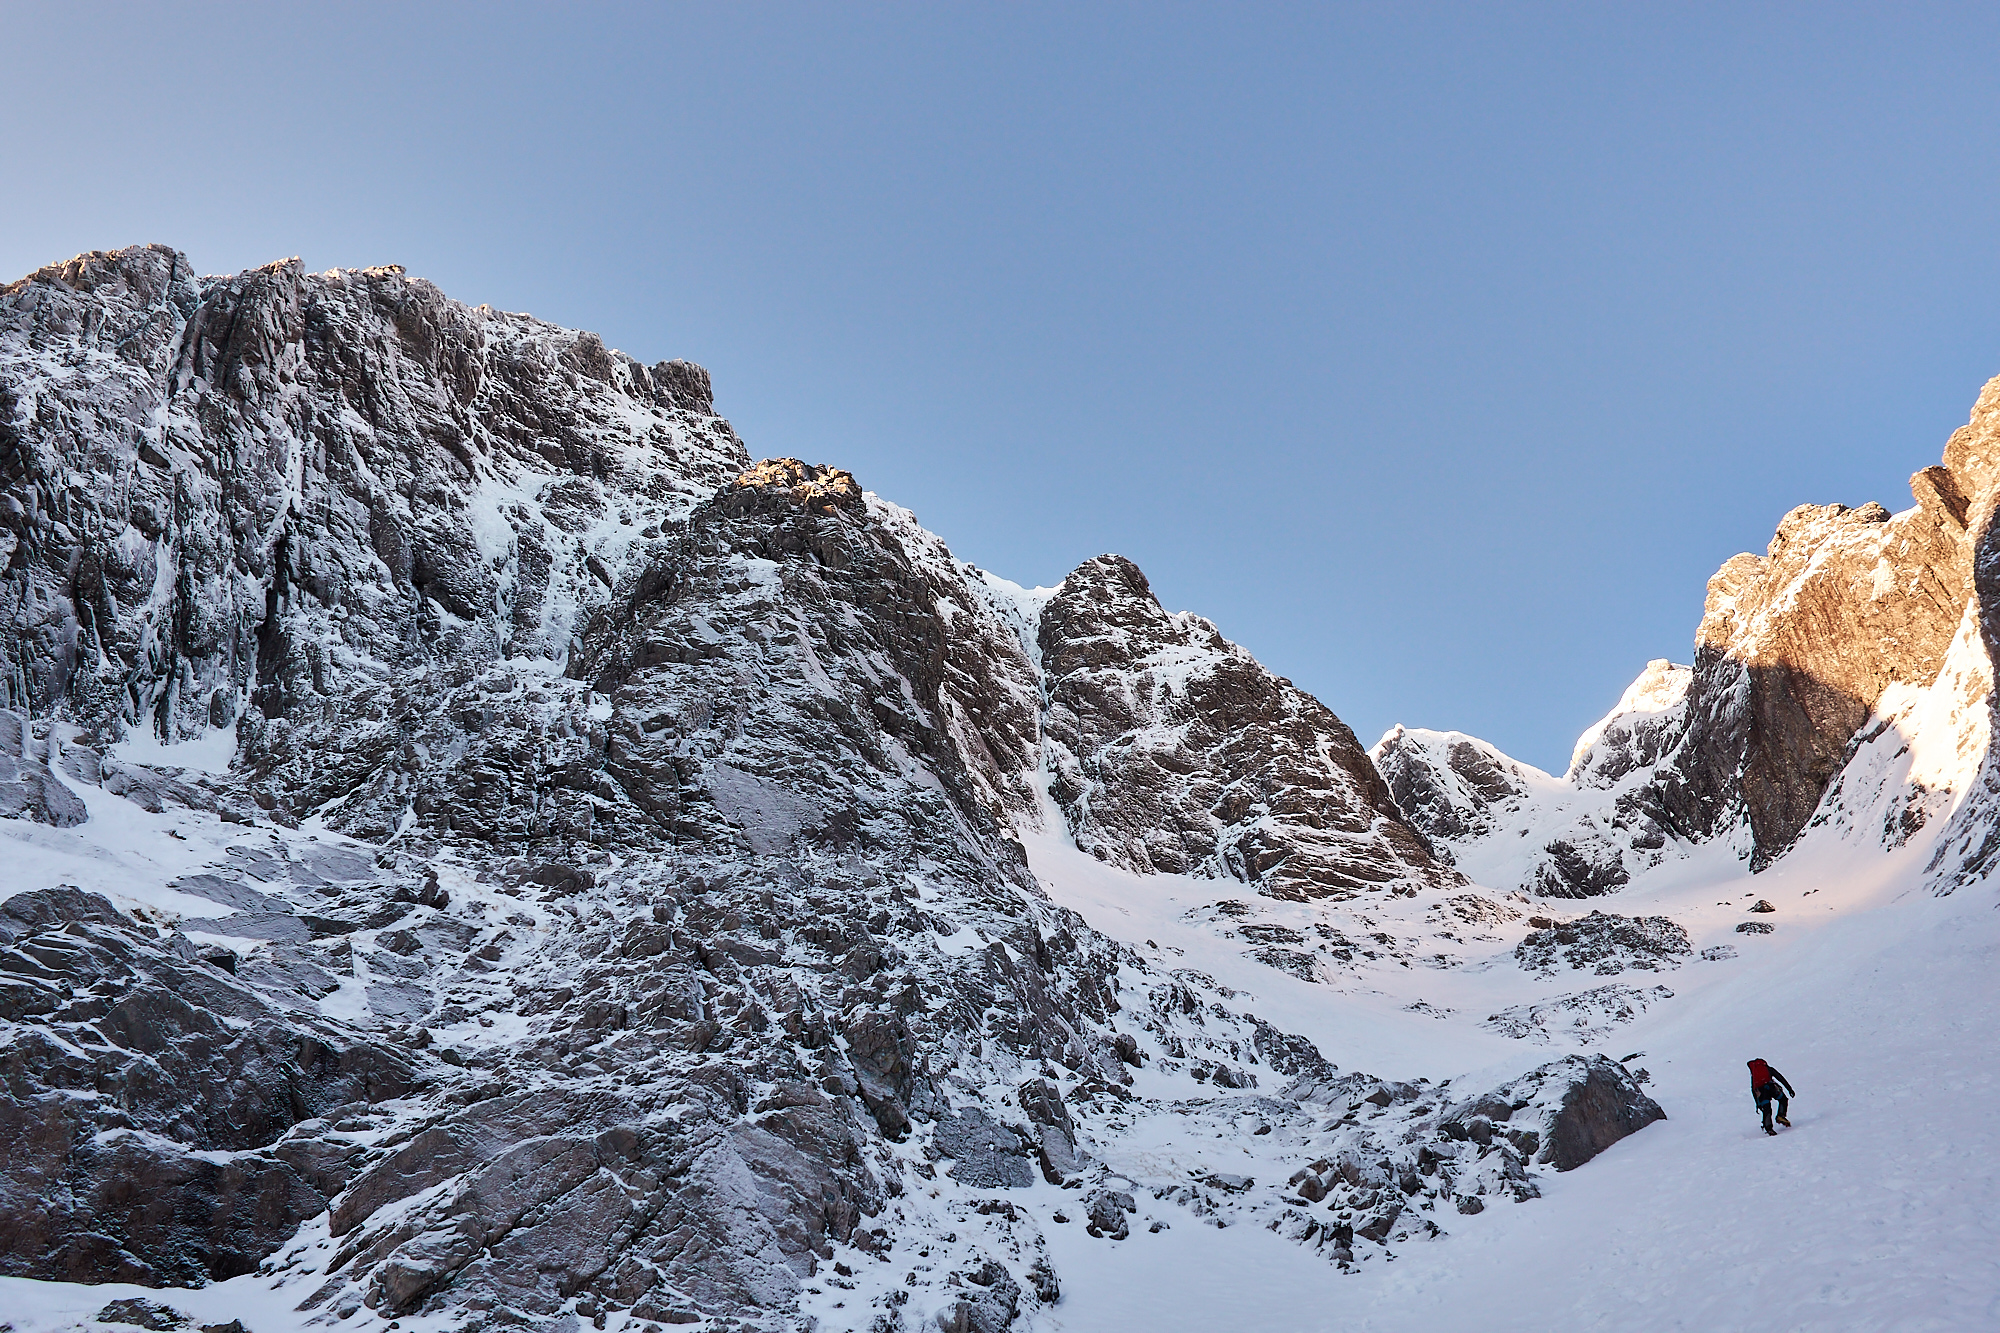 scottish winter ice climbing on hadrians wall direct ben nevis